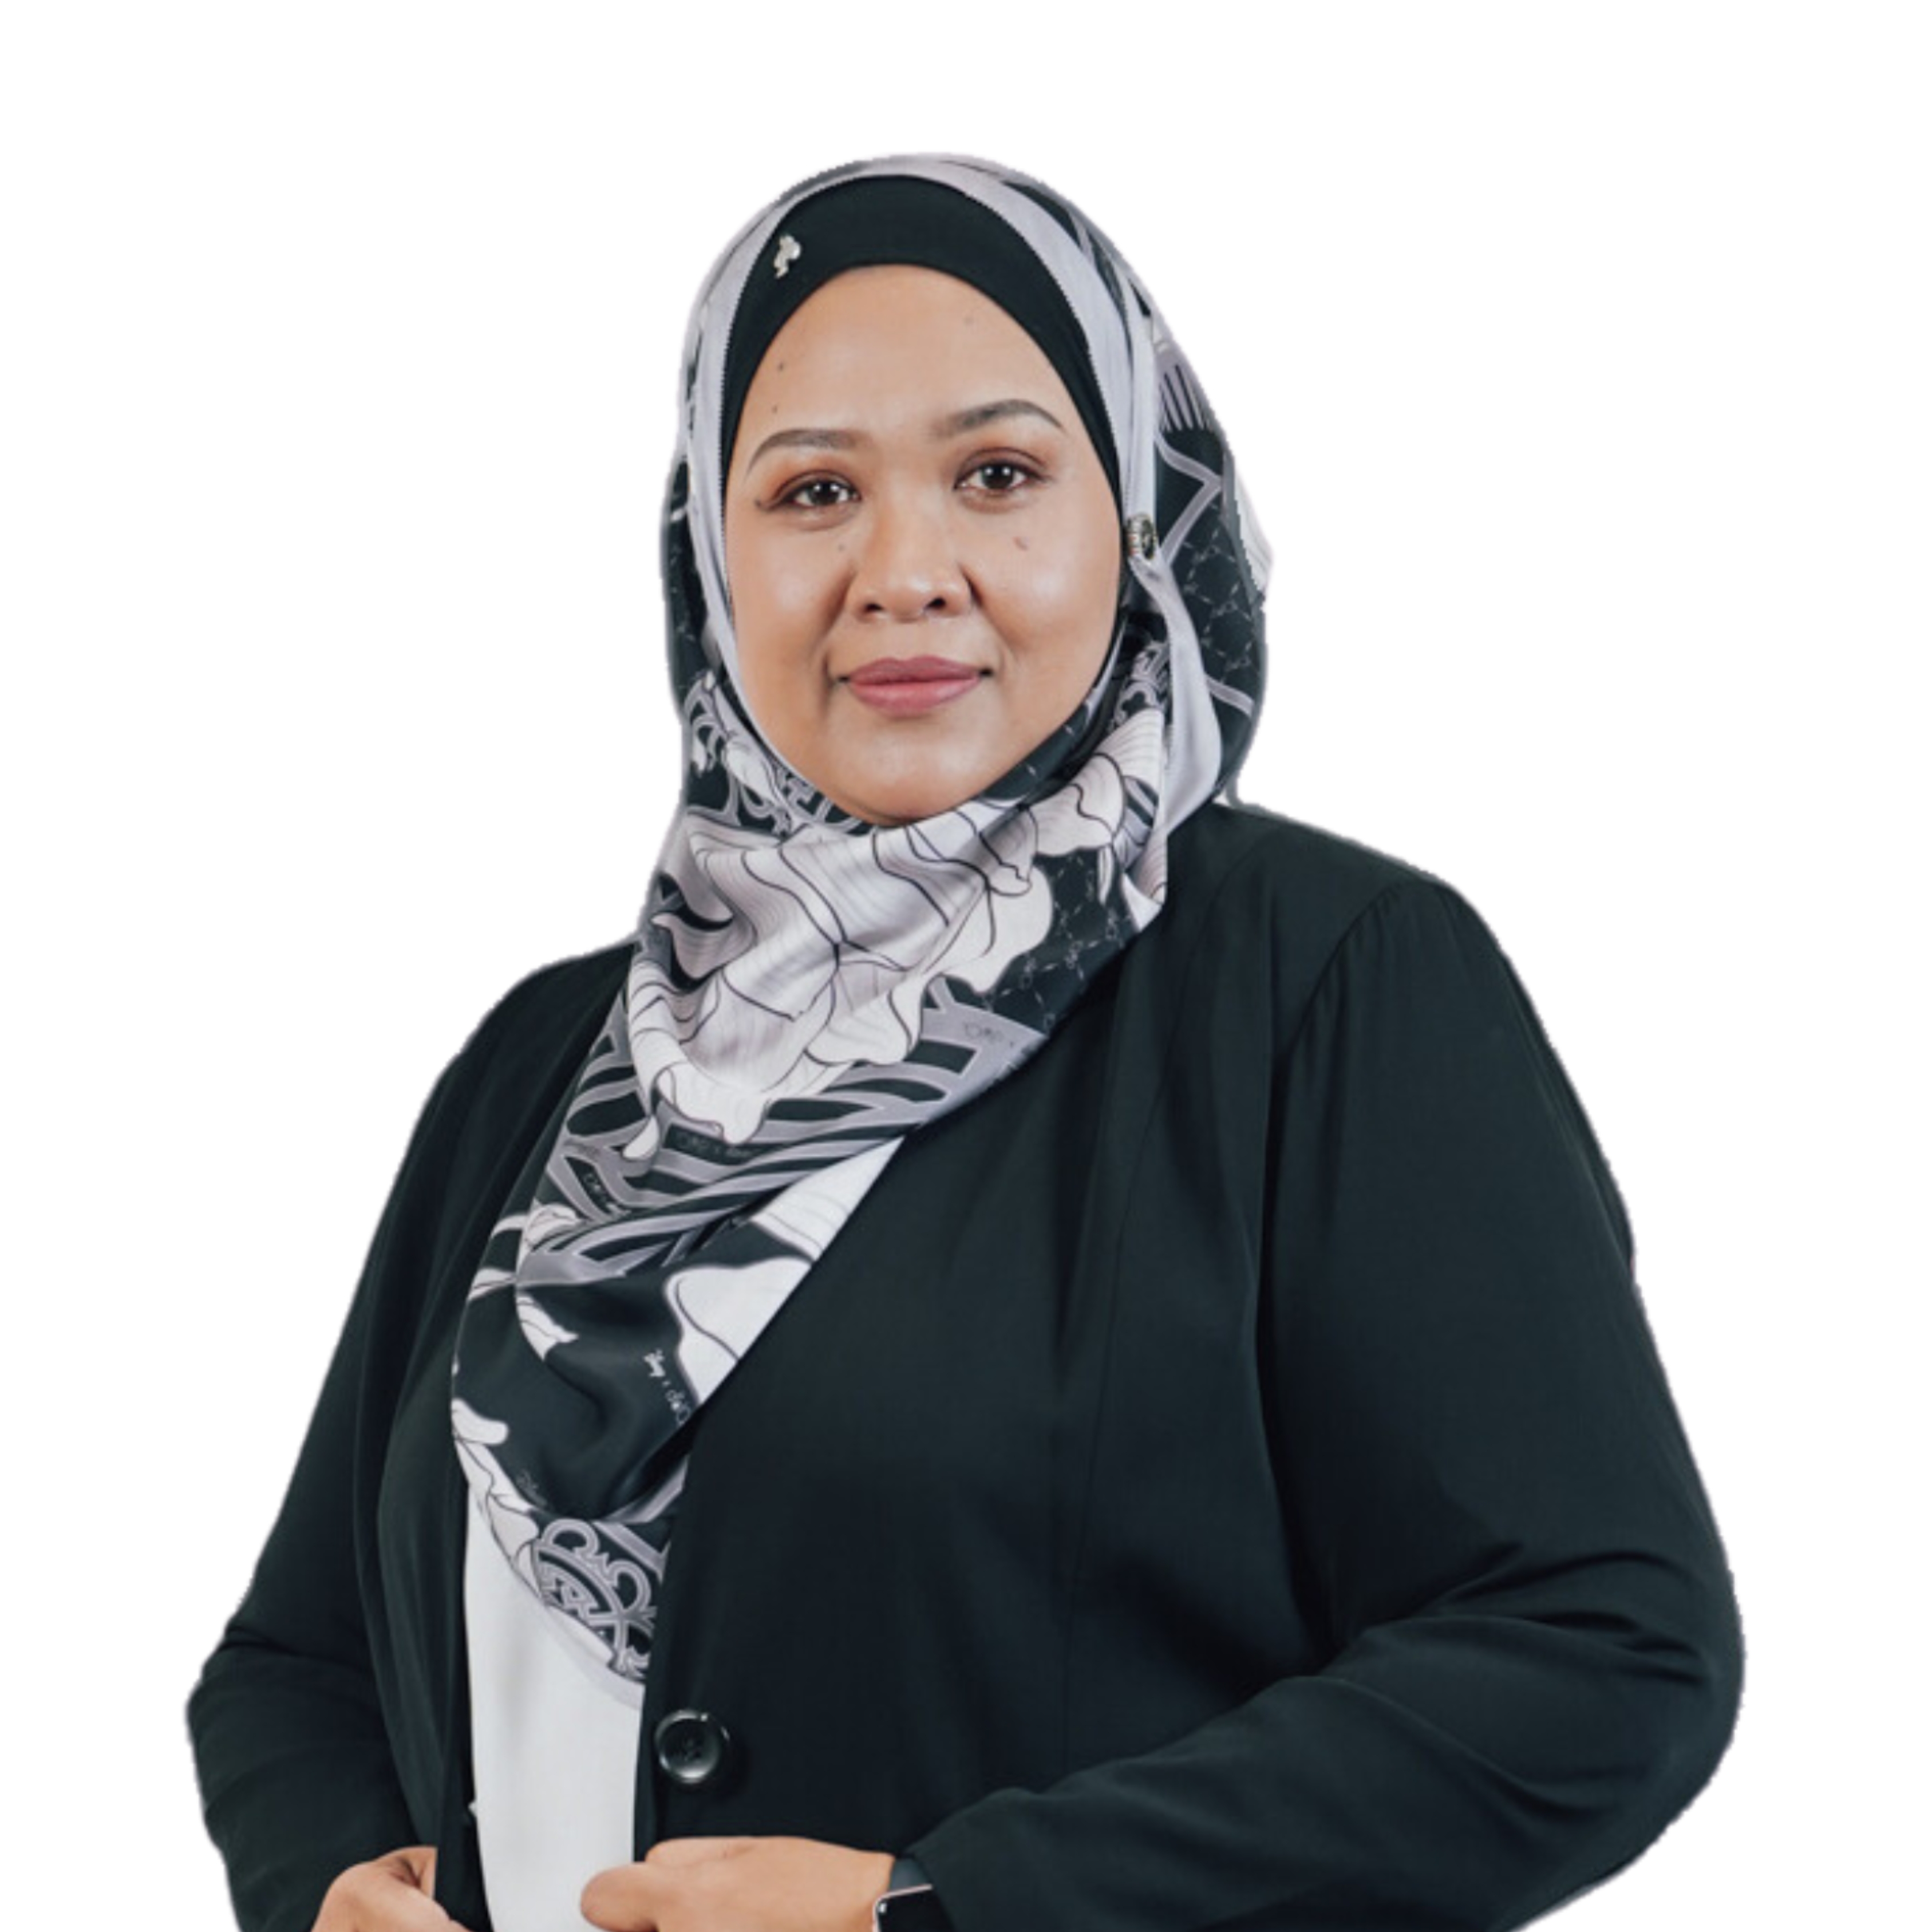 Dr. Rohaida Binti Adam, perunding Obstetrik dan Ginekologi (O&G) di Gleneagles Hospital Medini Johor